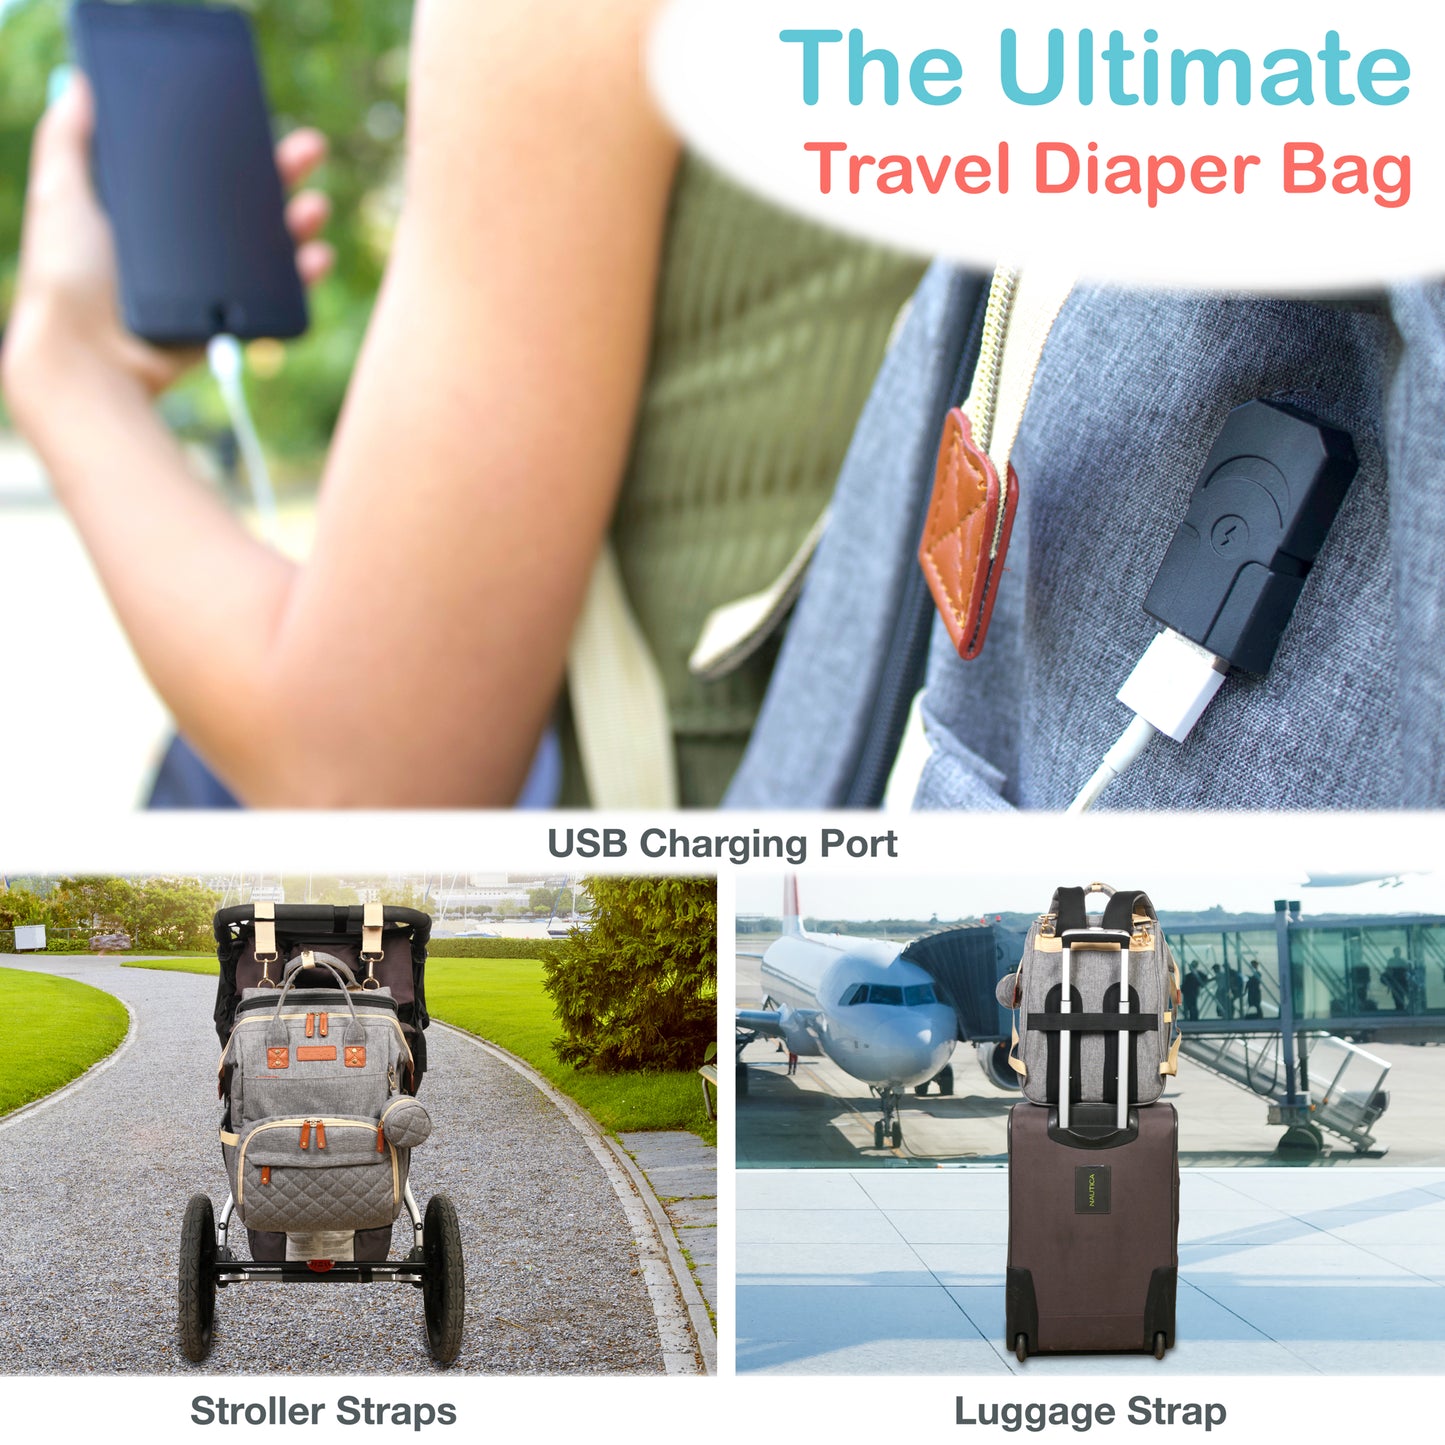 The Ultimate Travel Diaper Bag - USB Charging Port, Stroller Straps & Luggage Strap